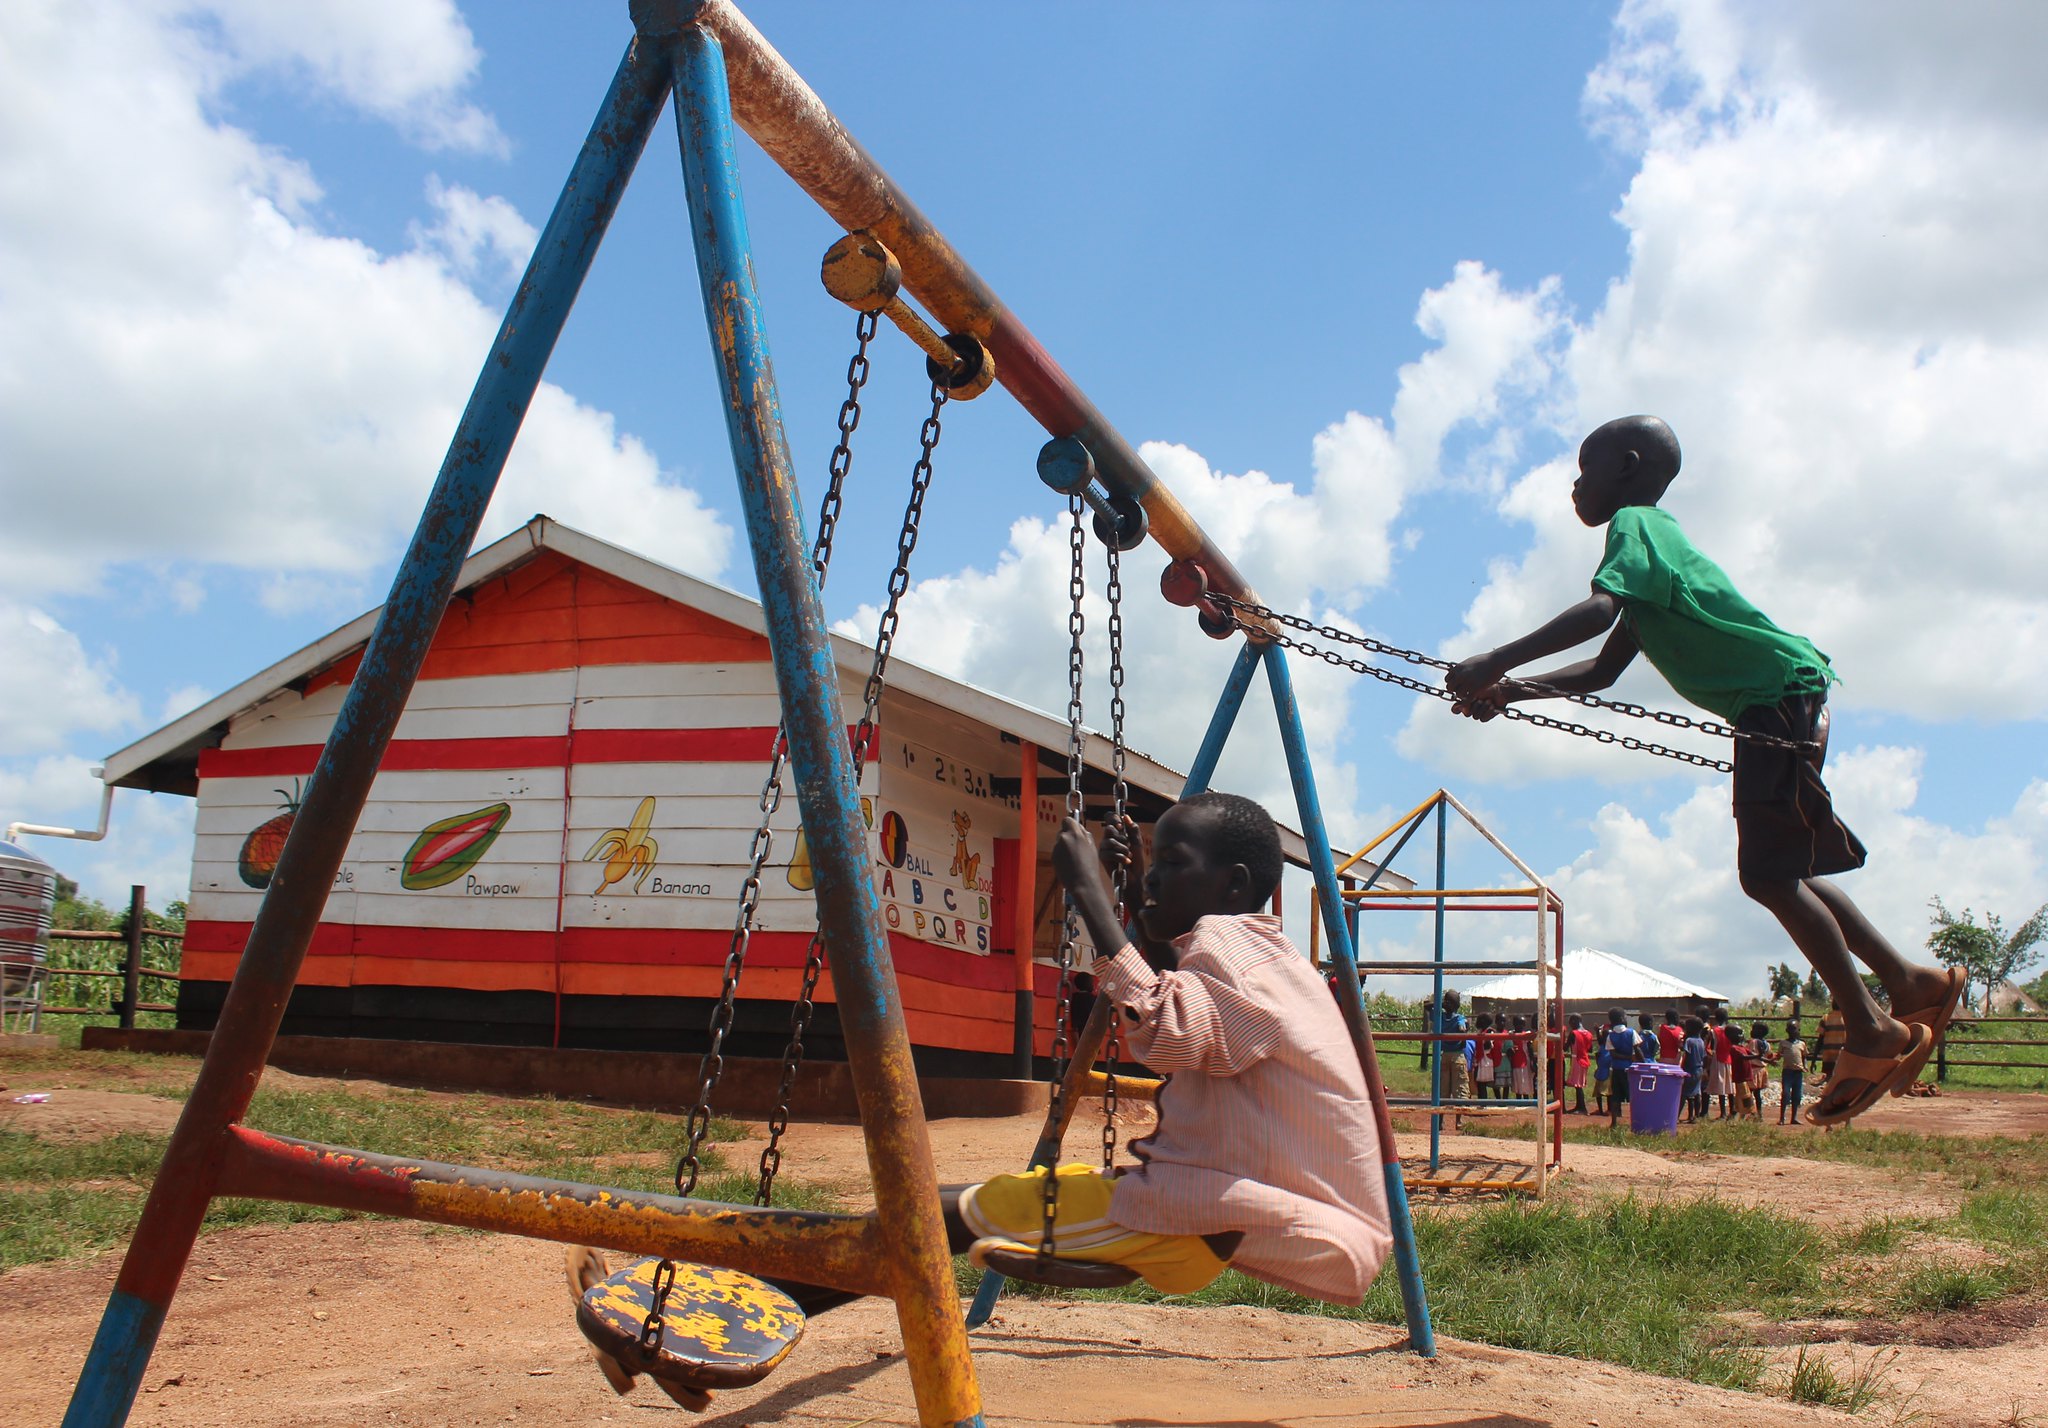 Children play on the playground of their preschool.